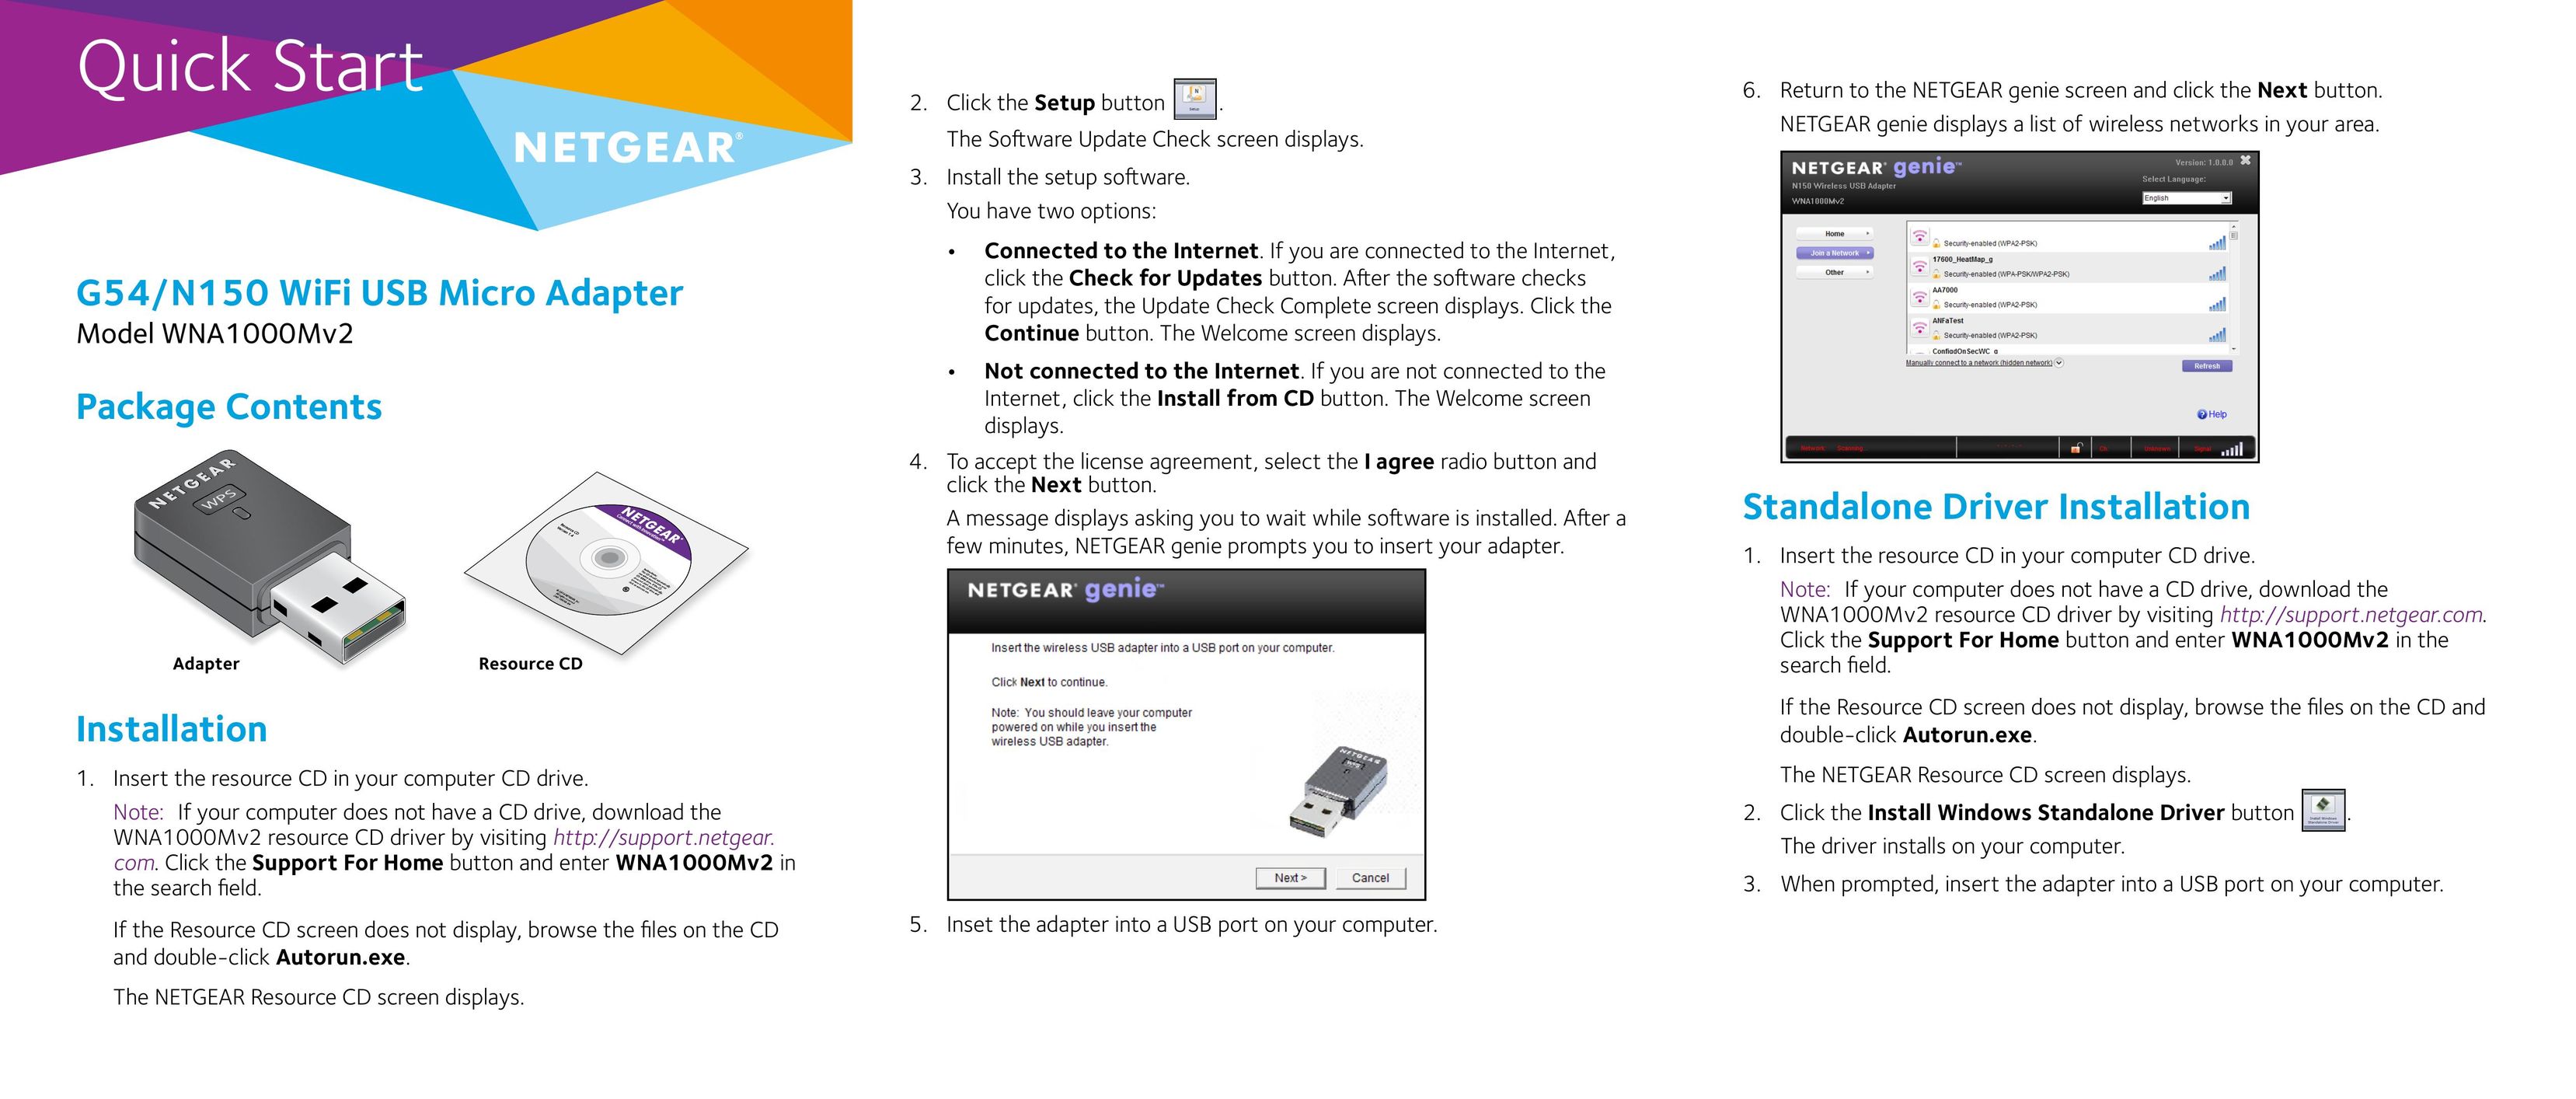 NETGEAR G54/N150 Network Card User Manual